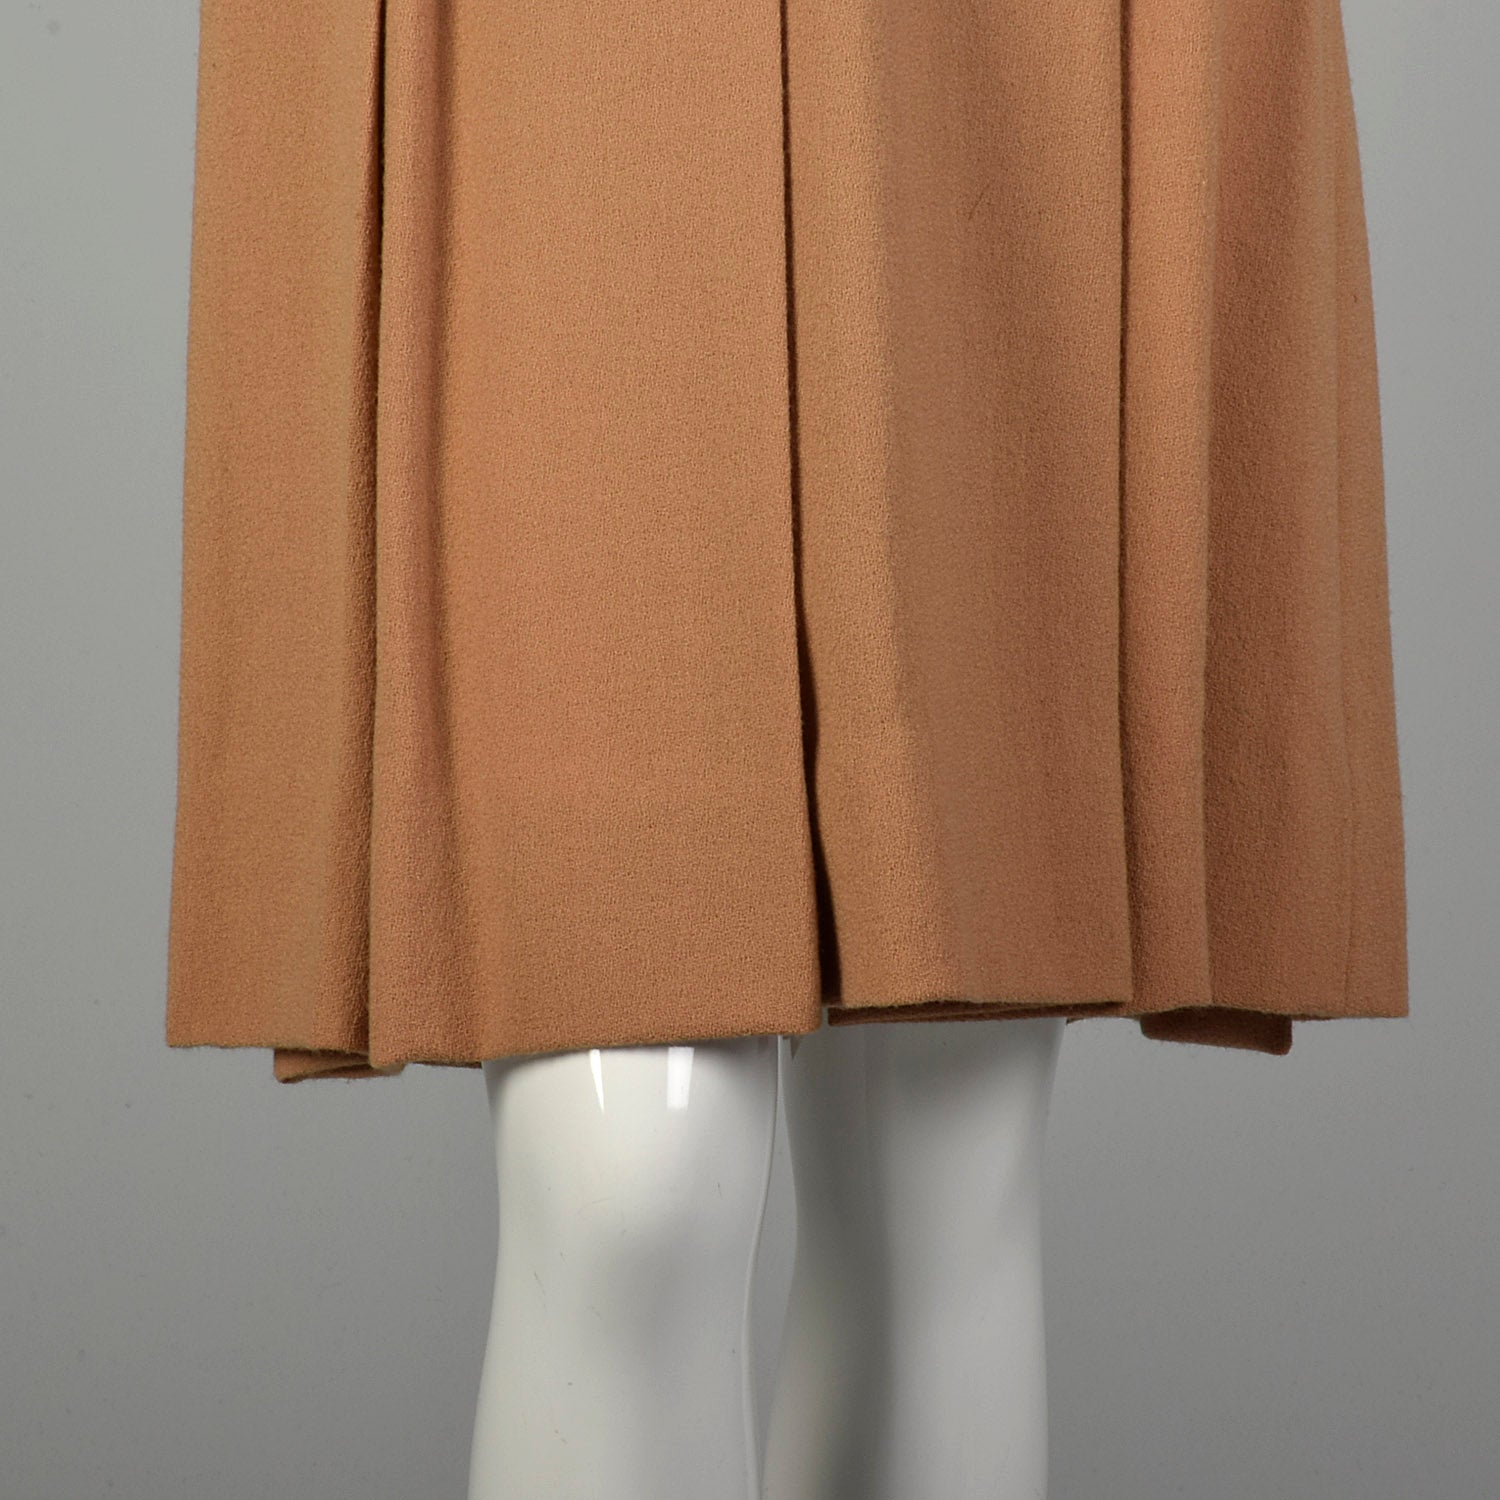 Small 1970s Suit Minimalist Camel Pleated Skirt 2pc Blazer Ensemble